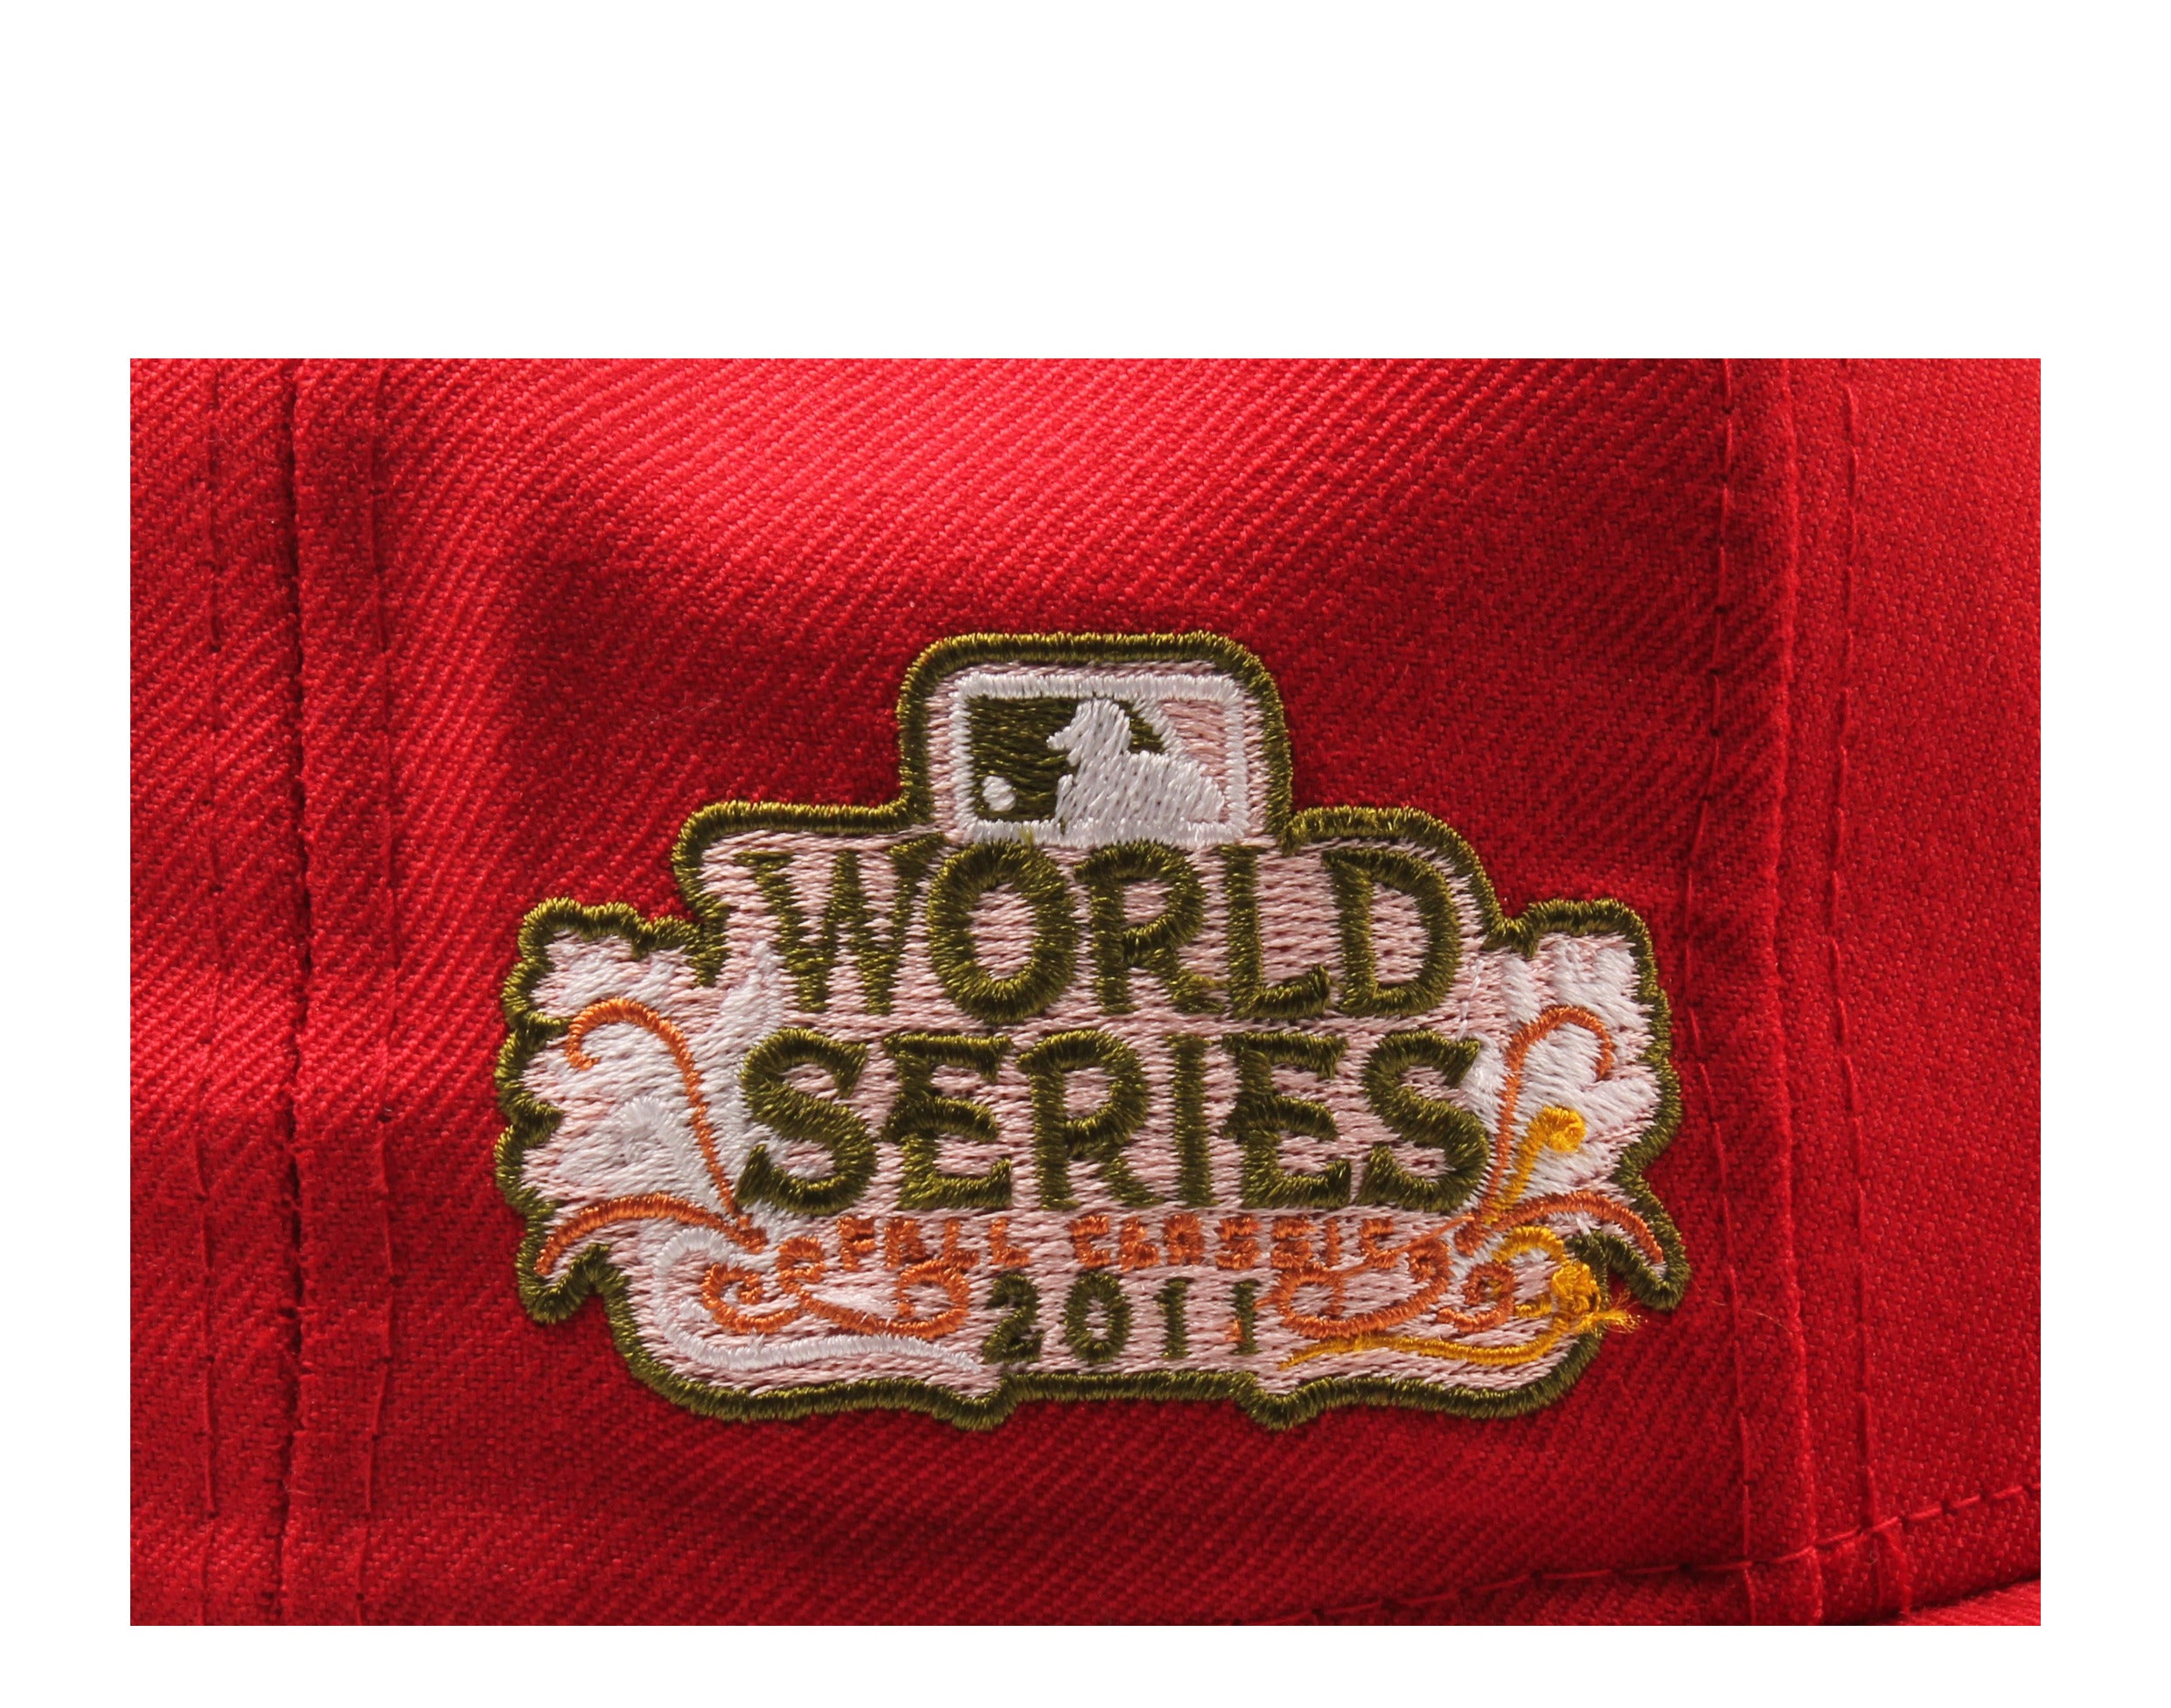 St. Louis Cardinals MLB Jumbo Grande 2 Lapel Pin Set of 2 (Current and  Retro Logos)